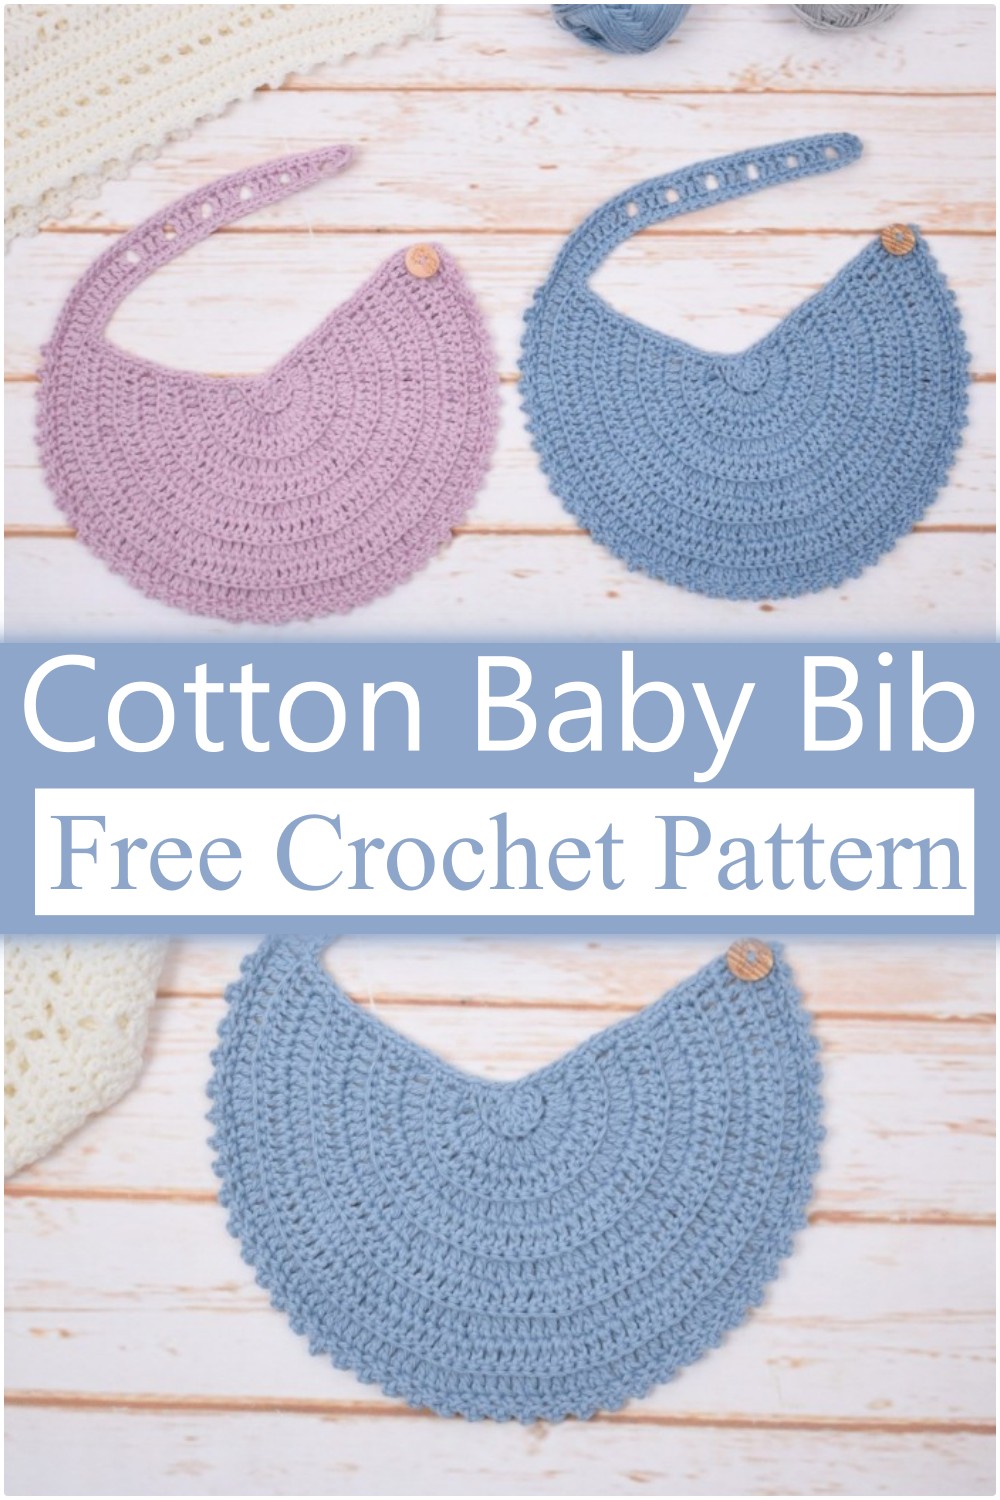 Moonlight Crochet Cotton Baby Bib Free Pattern